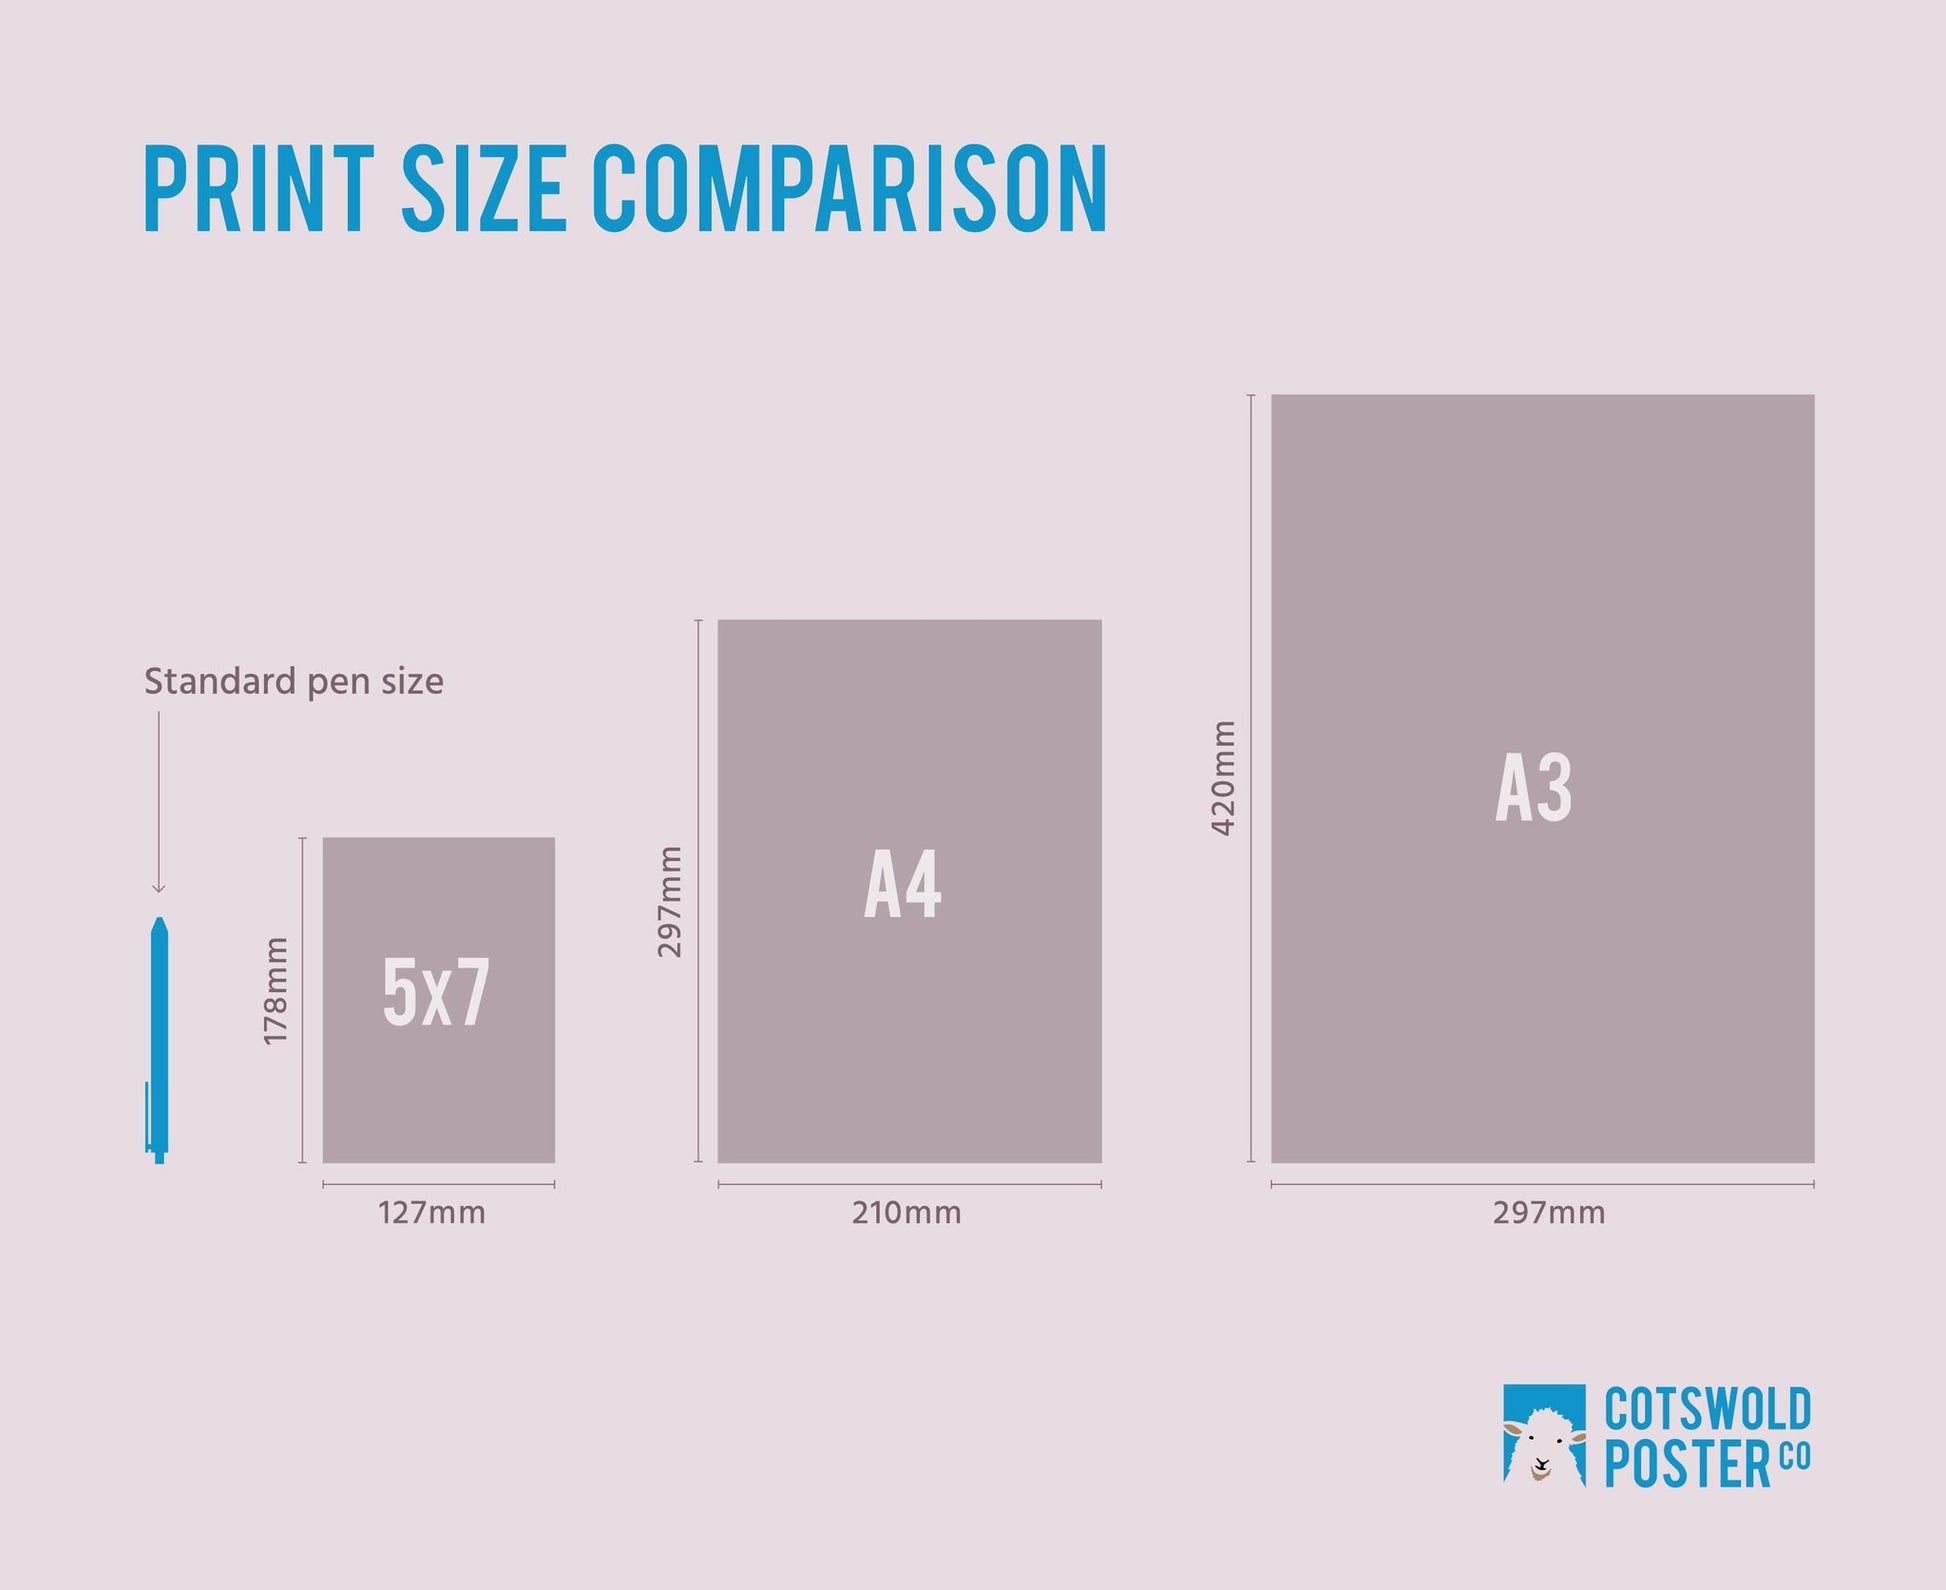 Print size graphic